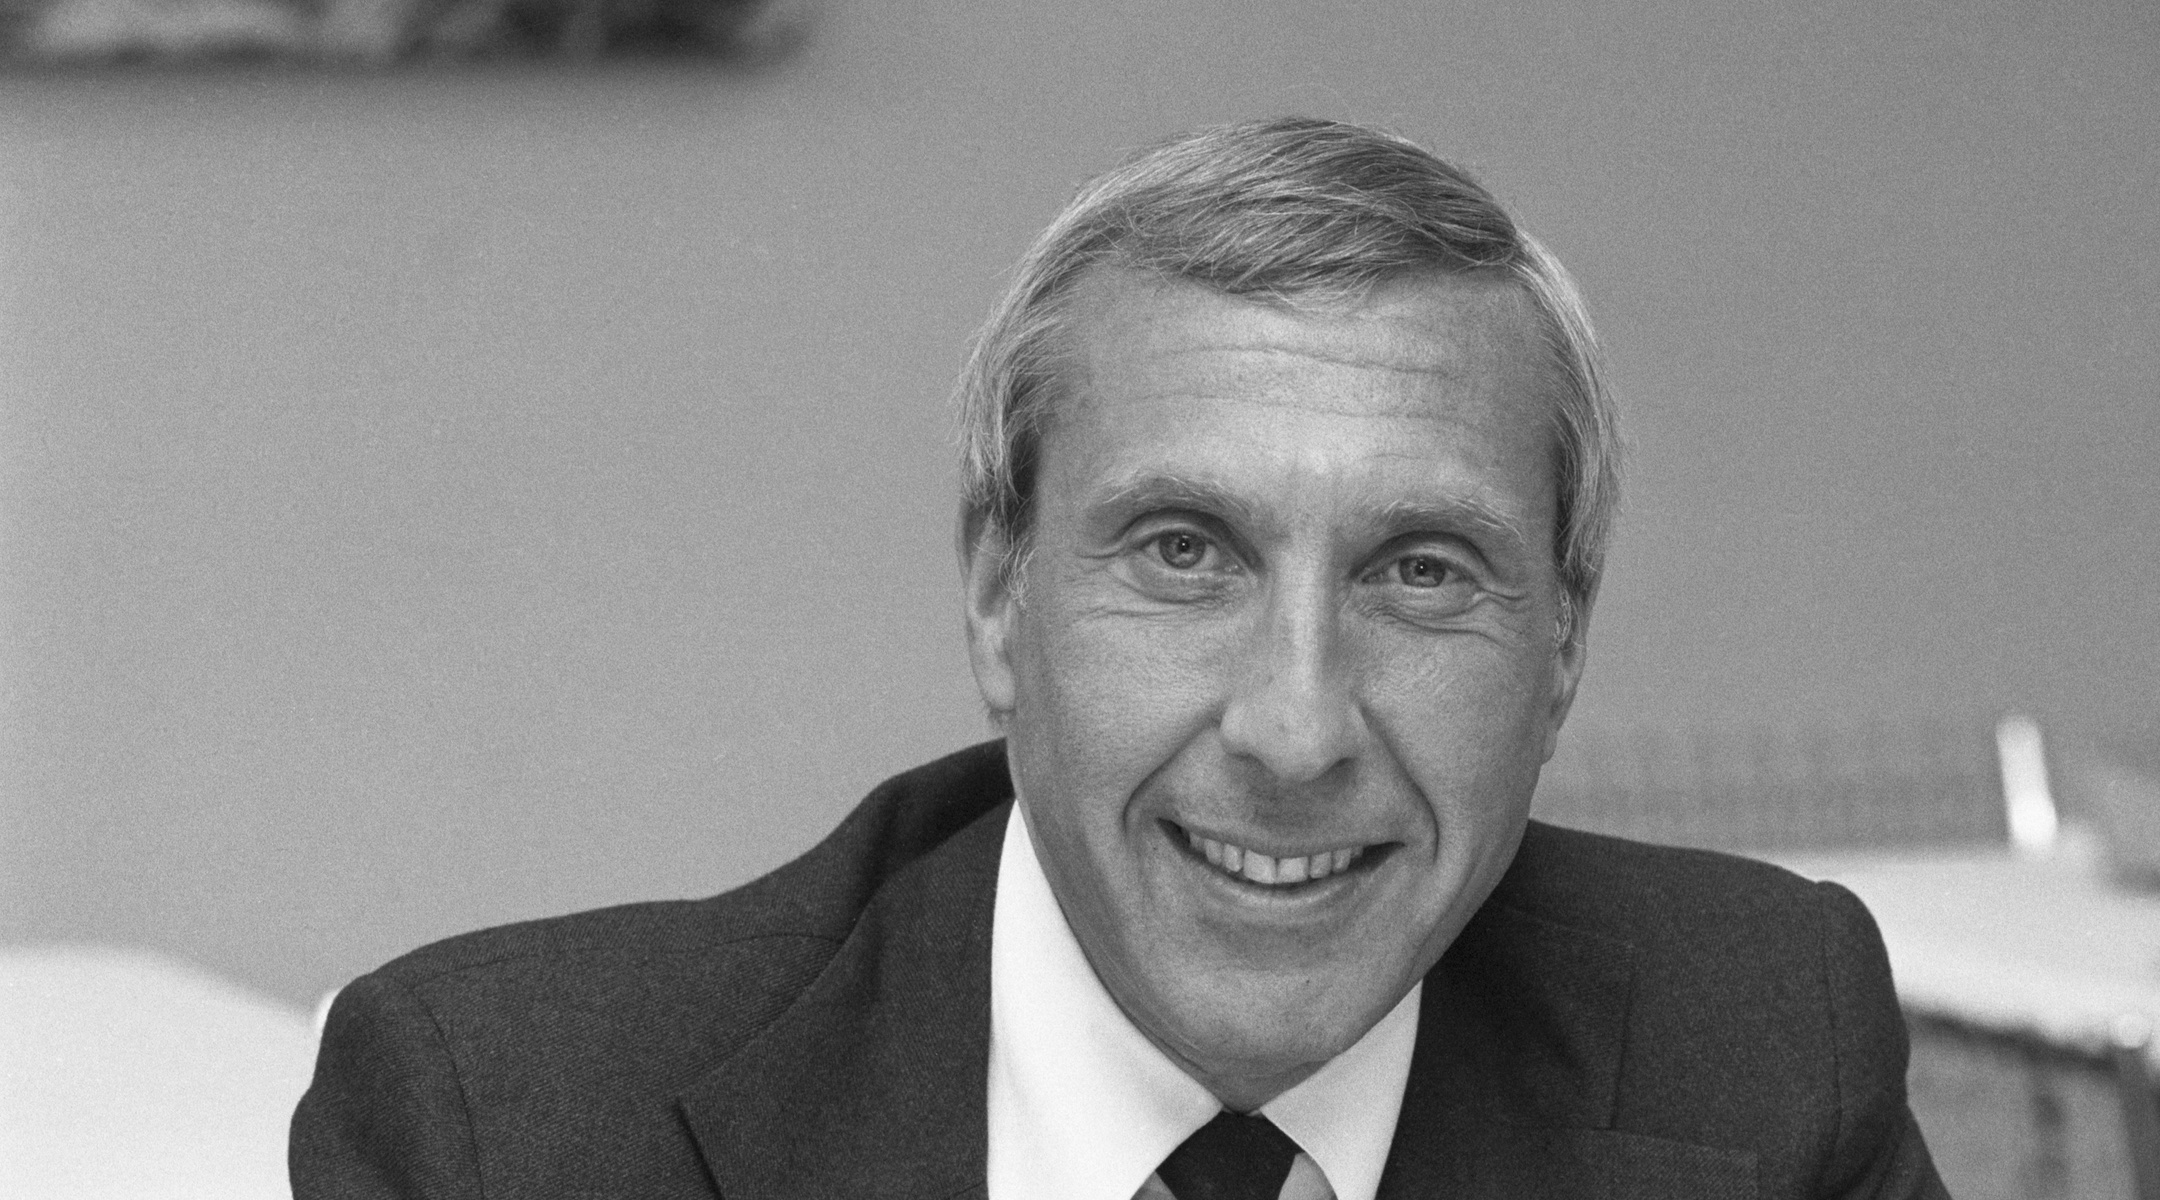 Ivan Boesky, financier whose downfall led to a Jewish communal reckoning, dies at 87